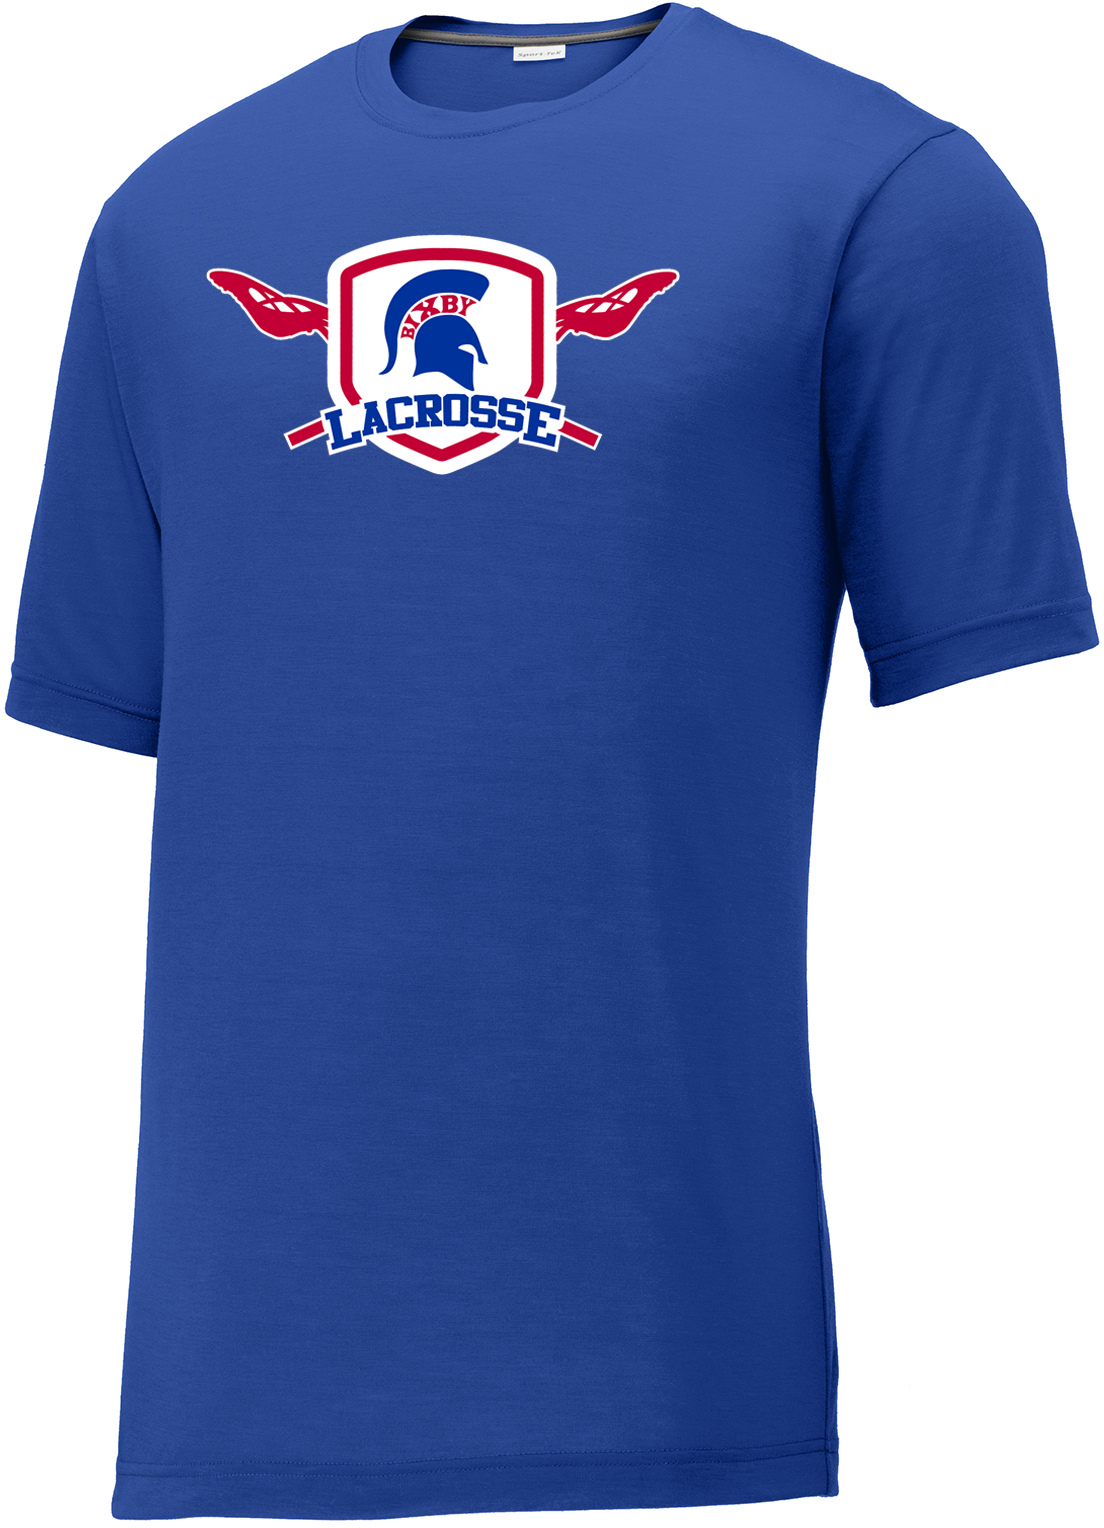 Bixby Lacrosse Royal Blue CottonTouch Performance T-Shirt